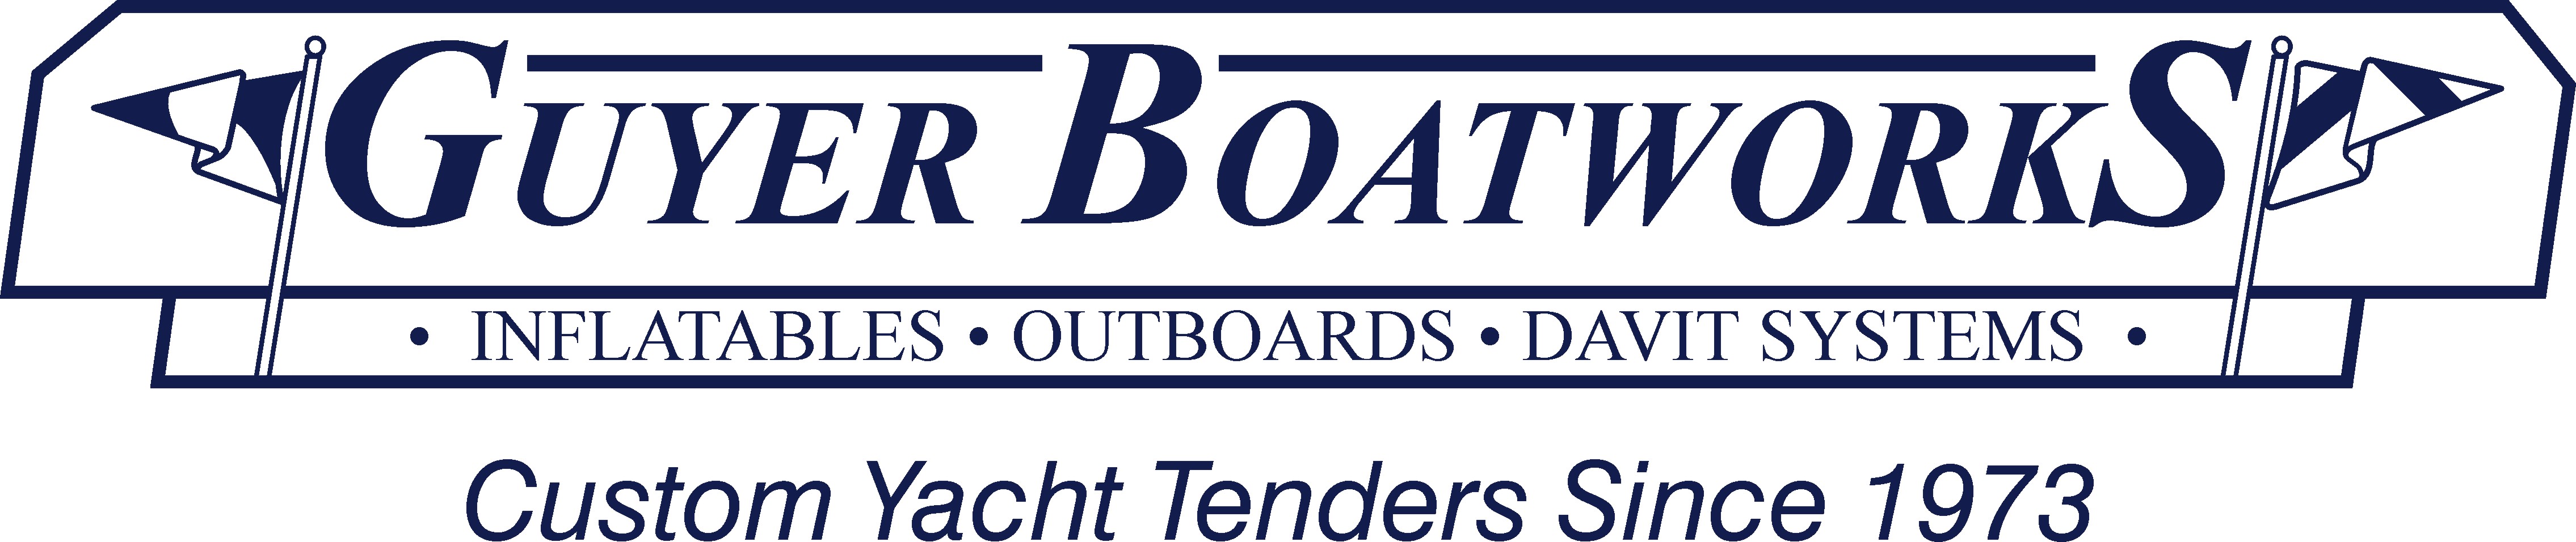 GUYER BOATWORKS Logo